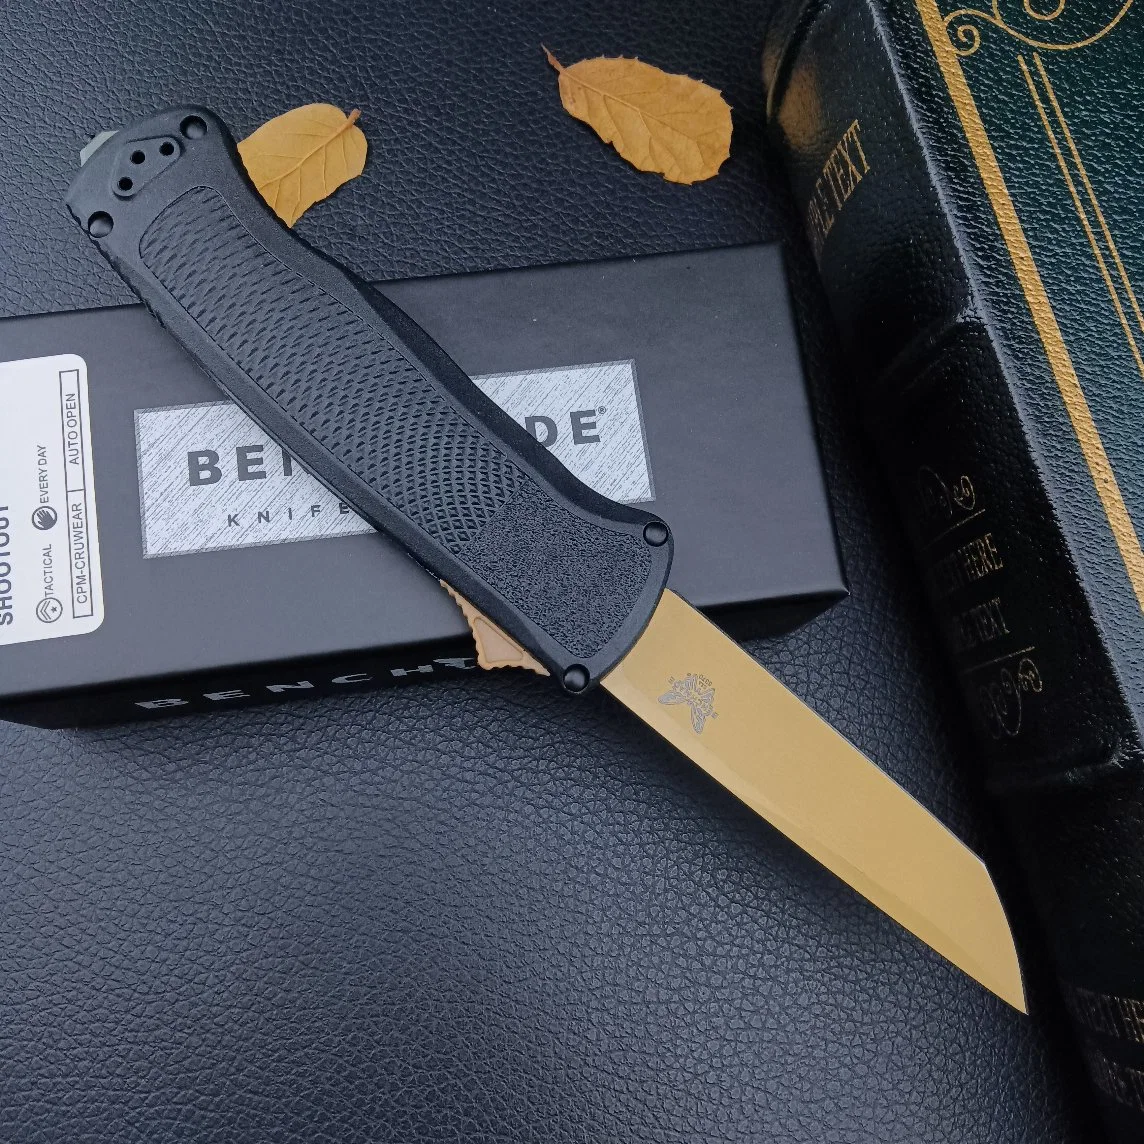 Benchmade 5370fe Blade Pocket Knife Outdoor Hunting Survival Folding Knife